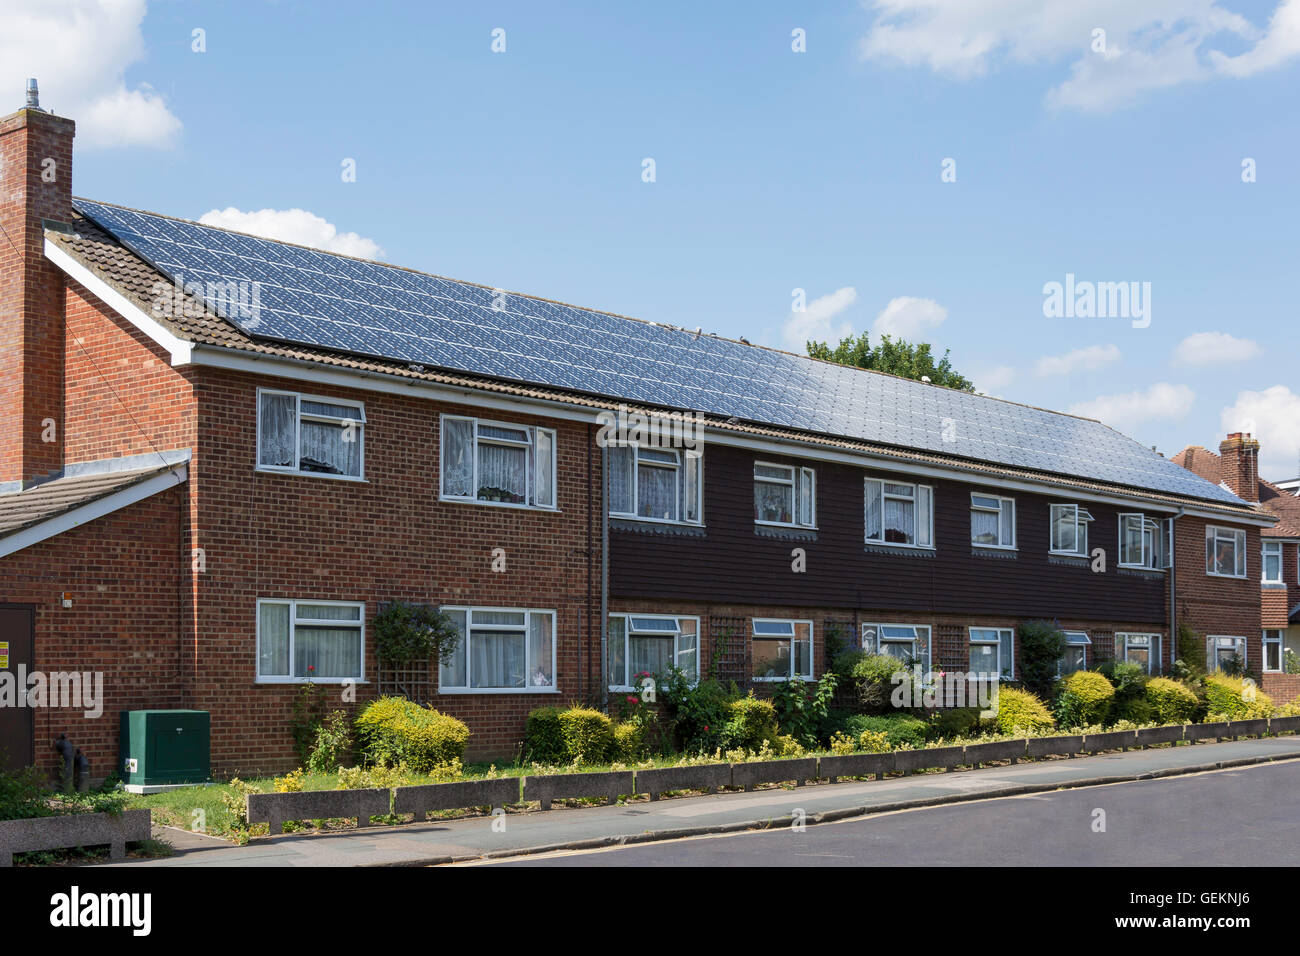 Housing block with solar panels on roof, Broadway, Knaphill, Surrey, England, United Kingdom Stock Photo